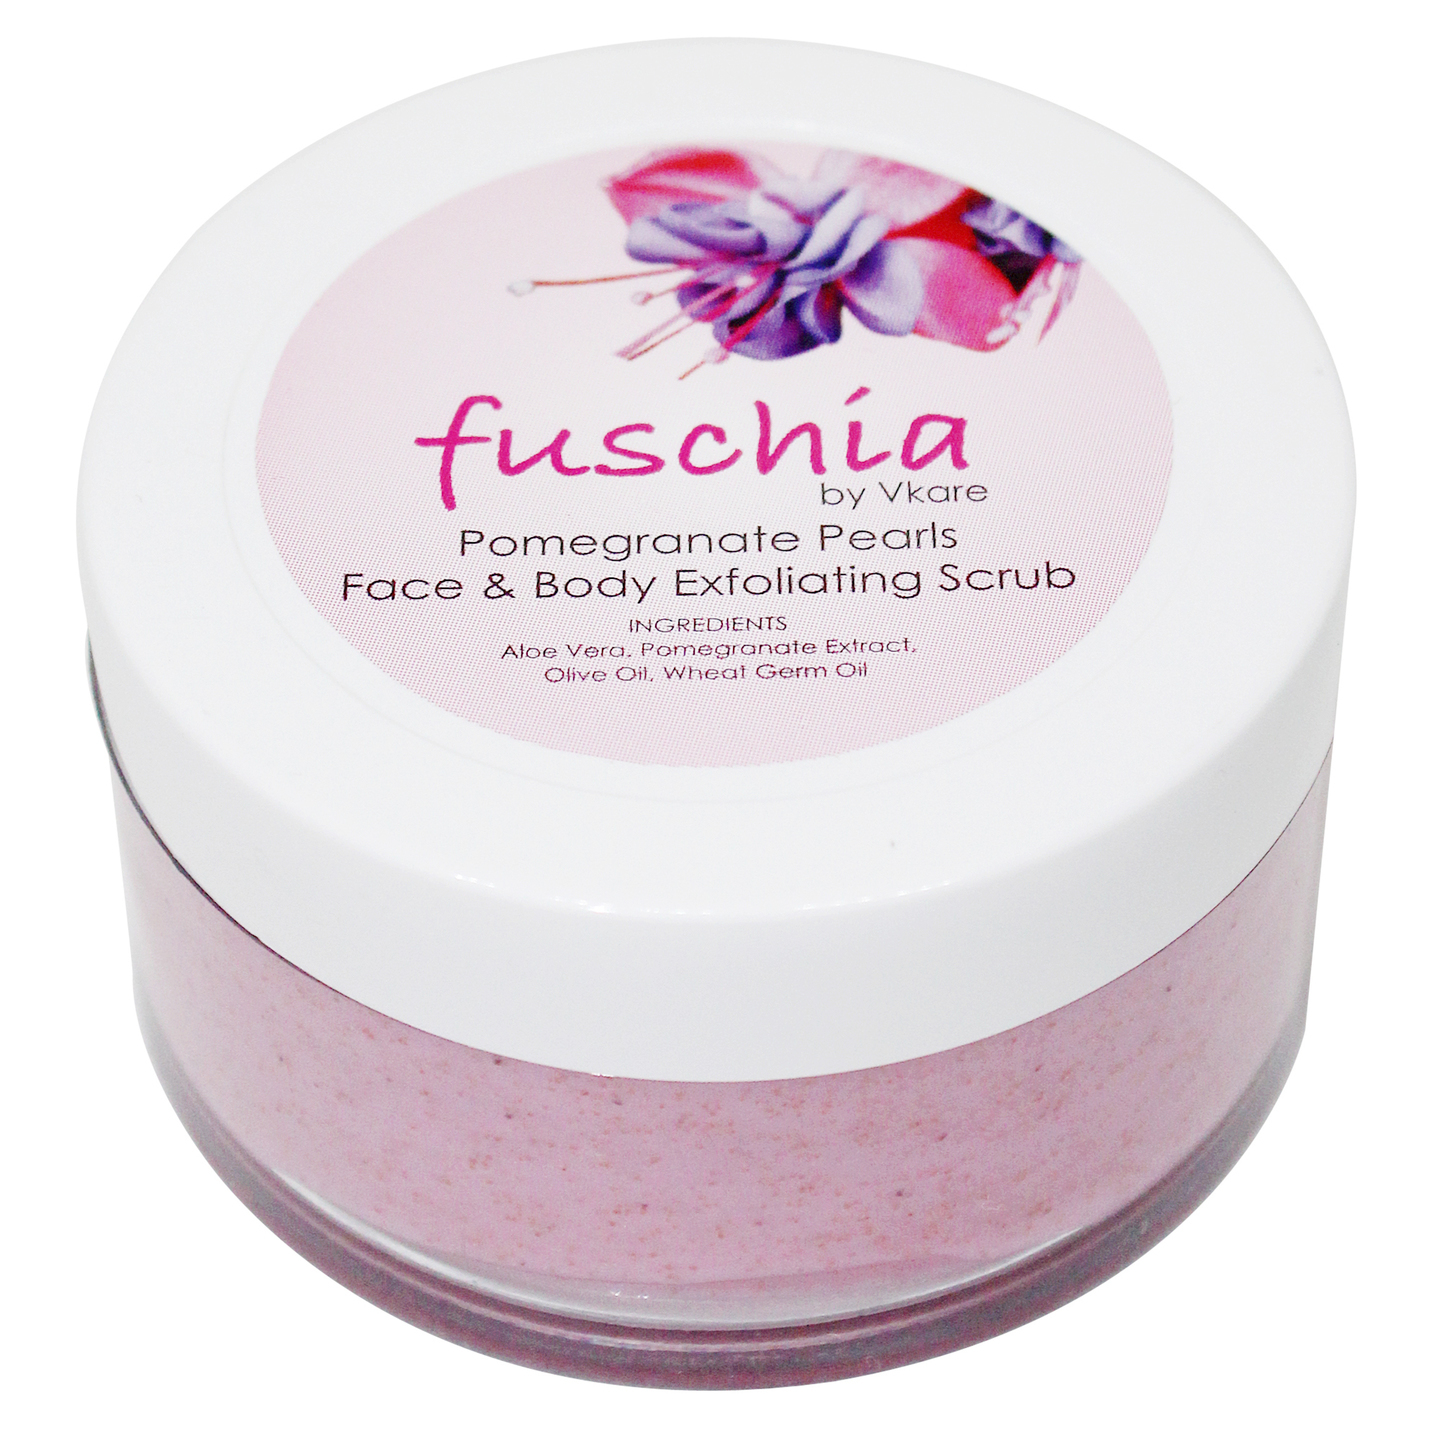 Fuschia - Pomegranate Pearls - Face & Body Exfoliating Scrub -50g